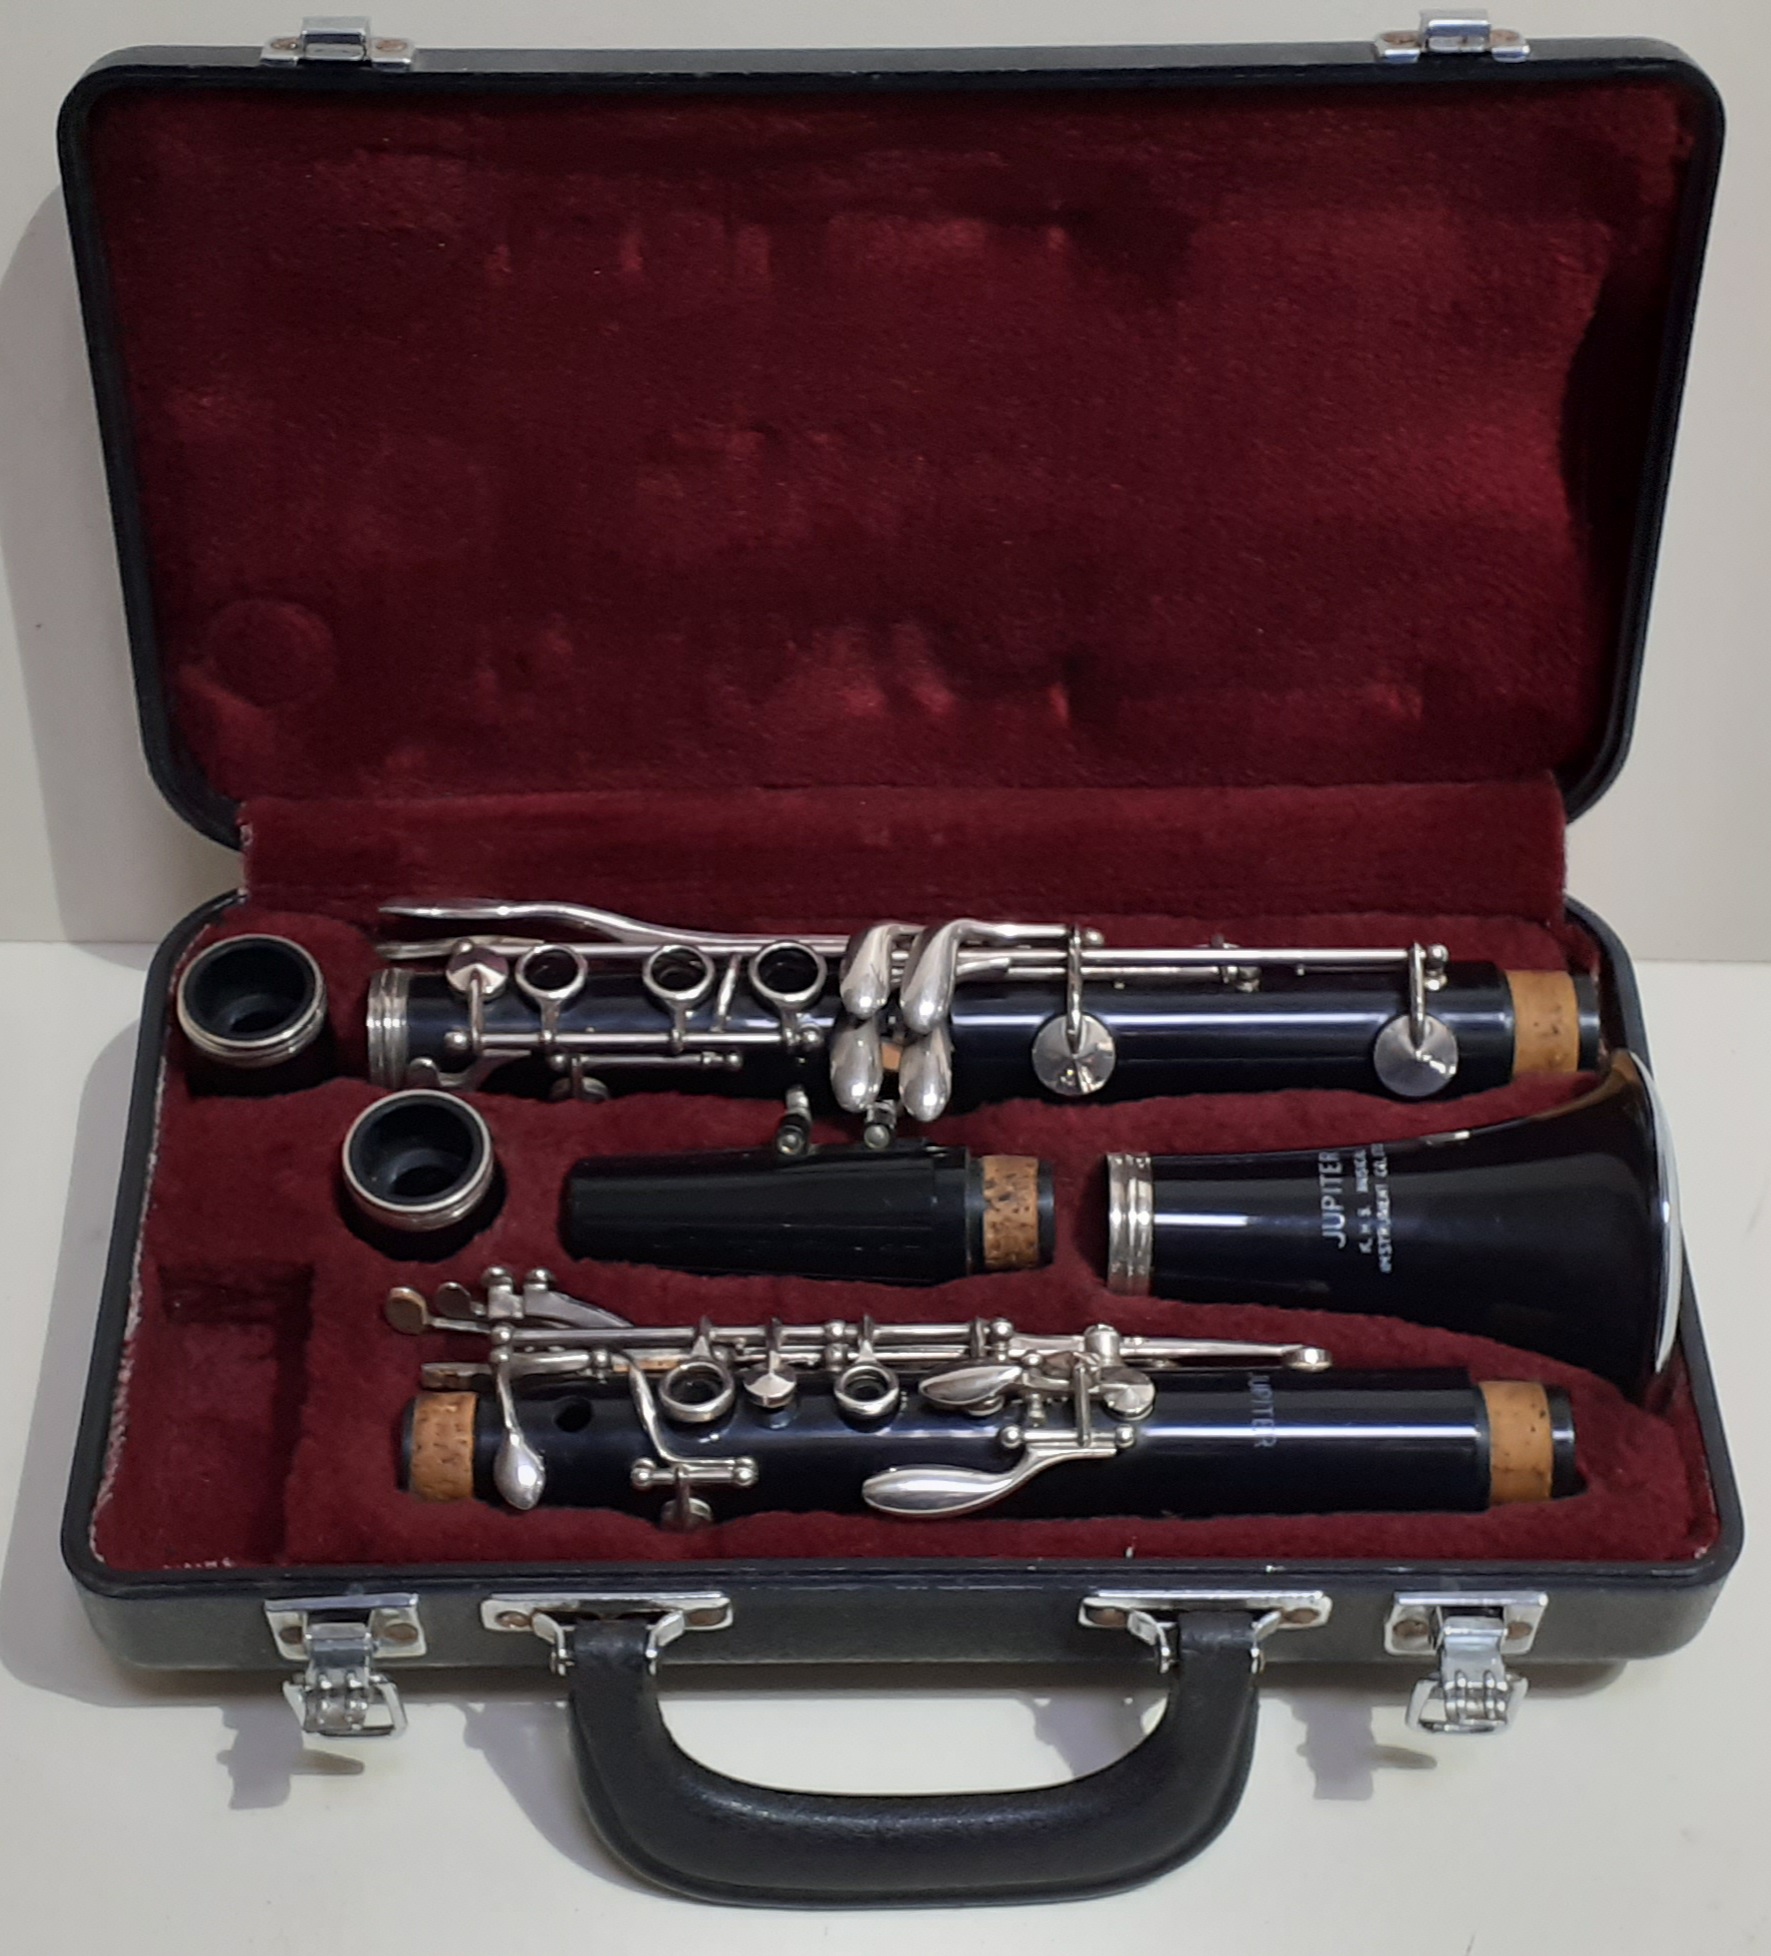 A Jupiter clarinet in case, marked 'JUPITOR K.H.S MUSICAL INSTRUMENT CO.LTD.